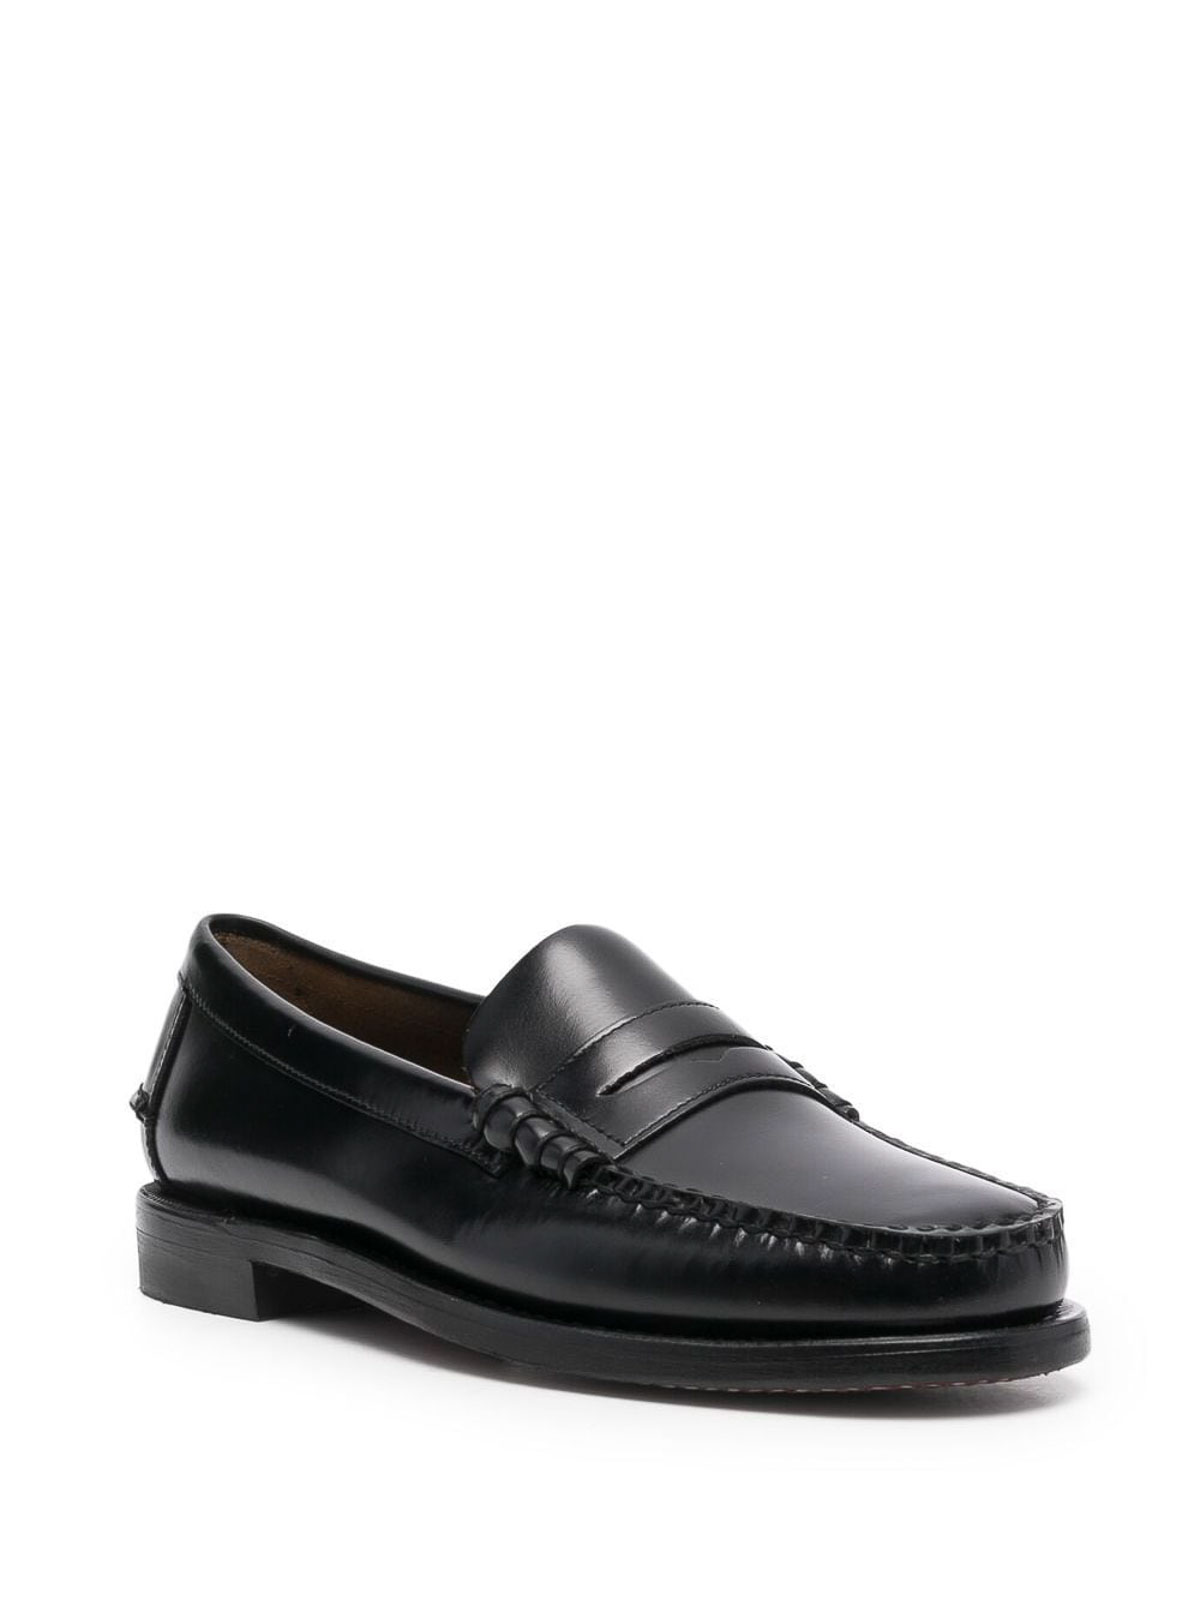 Shop Sebago Black Classic Loafers